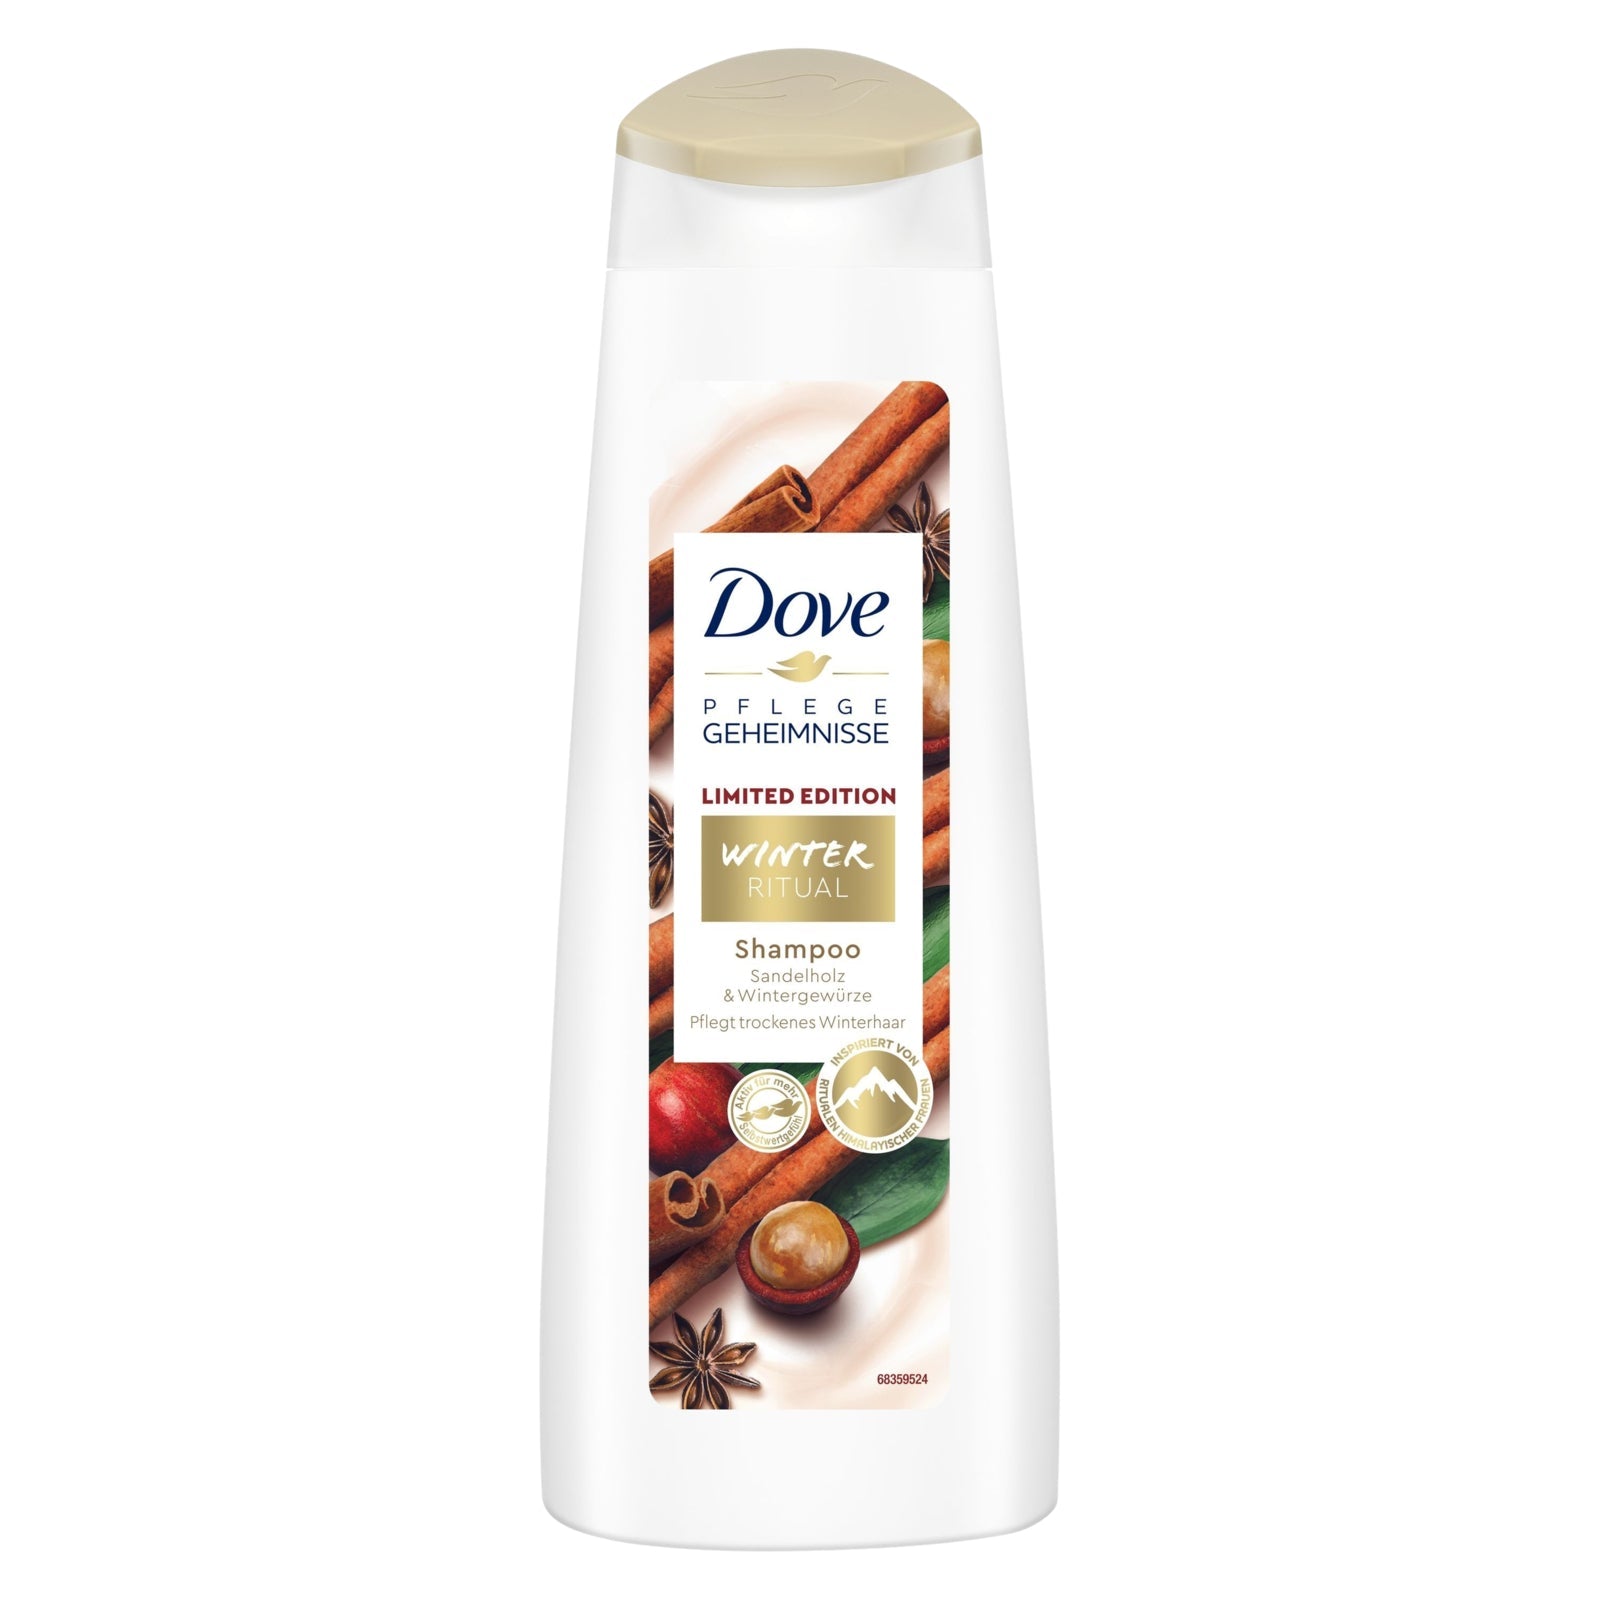 Dove Winterpflege Special Edition Shampoo (250ml)